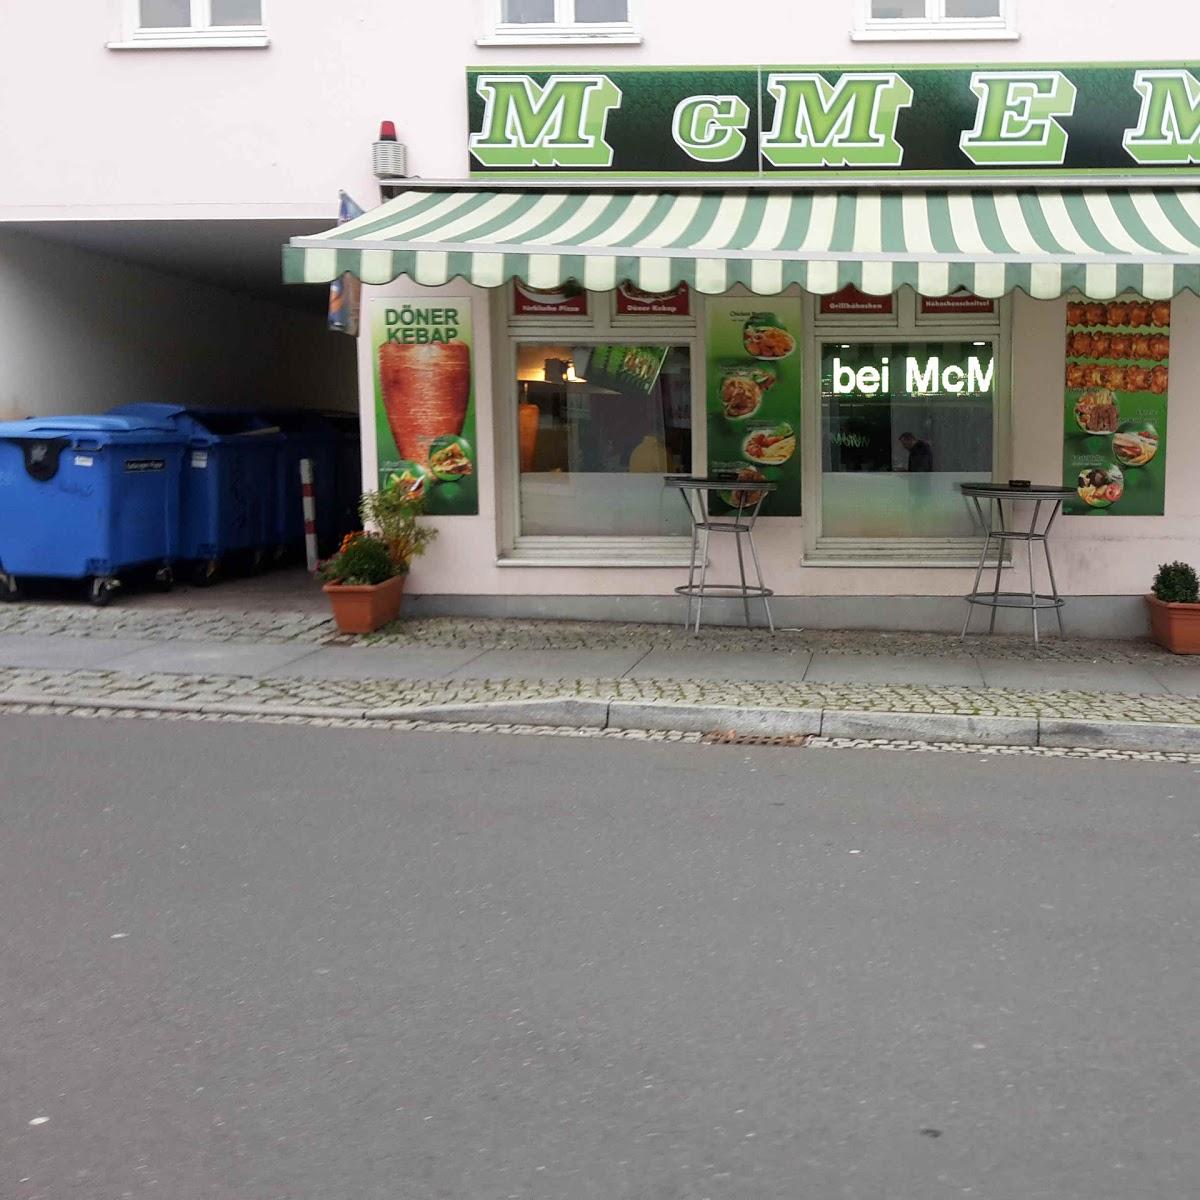 Restaurant "Memo" in Strausberg